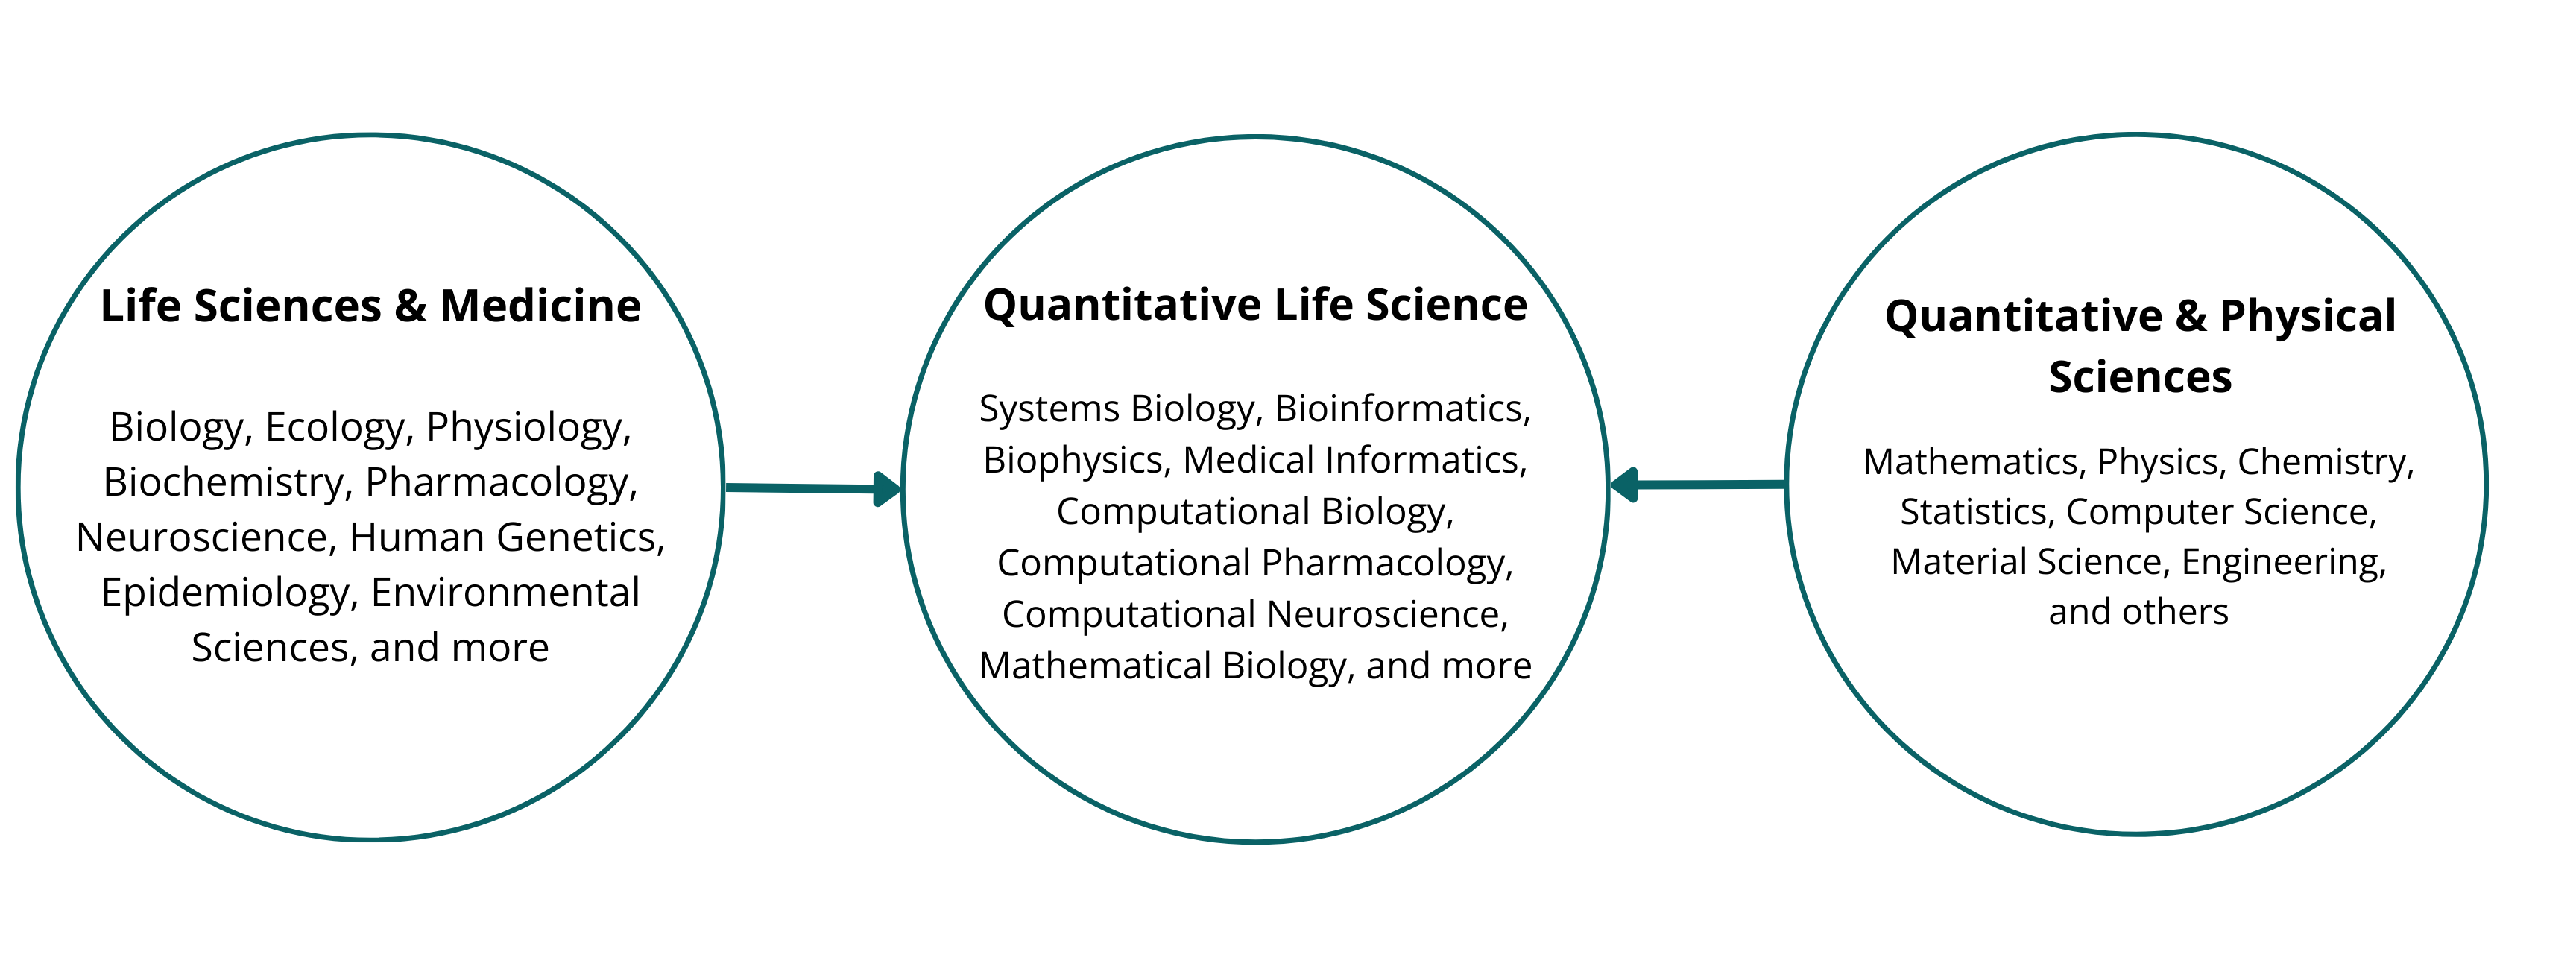 Quantitative life sciences brings together medicine and physical sciences